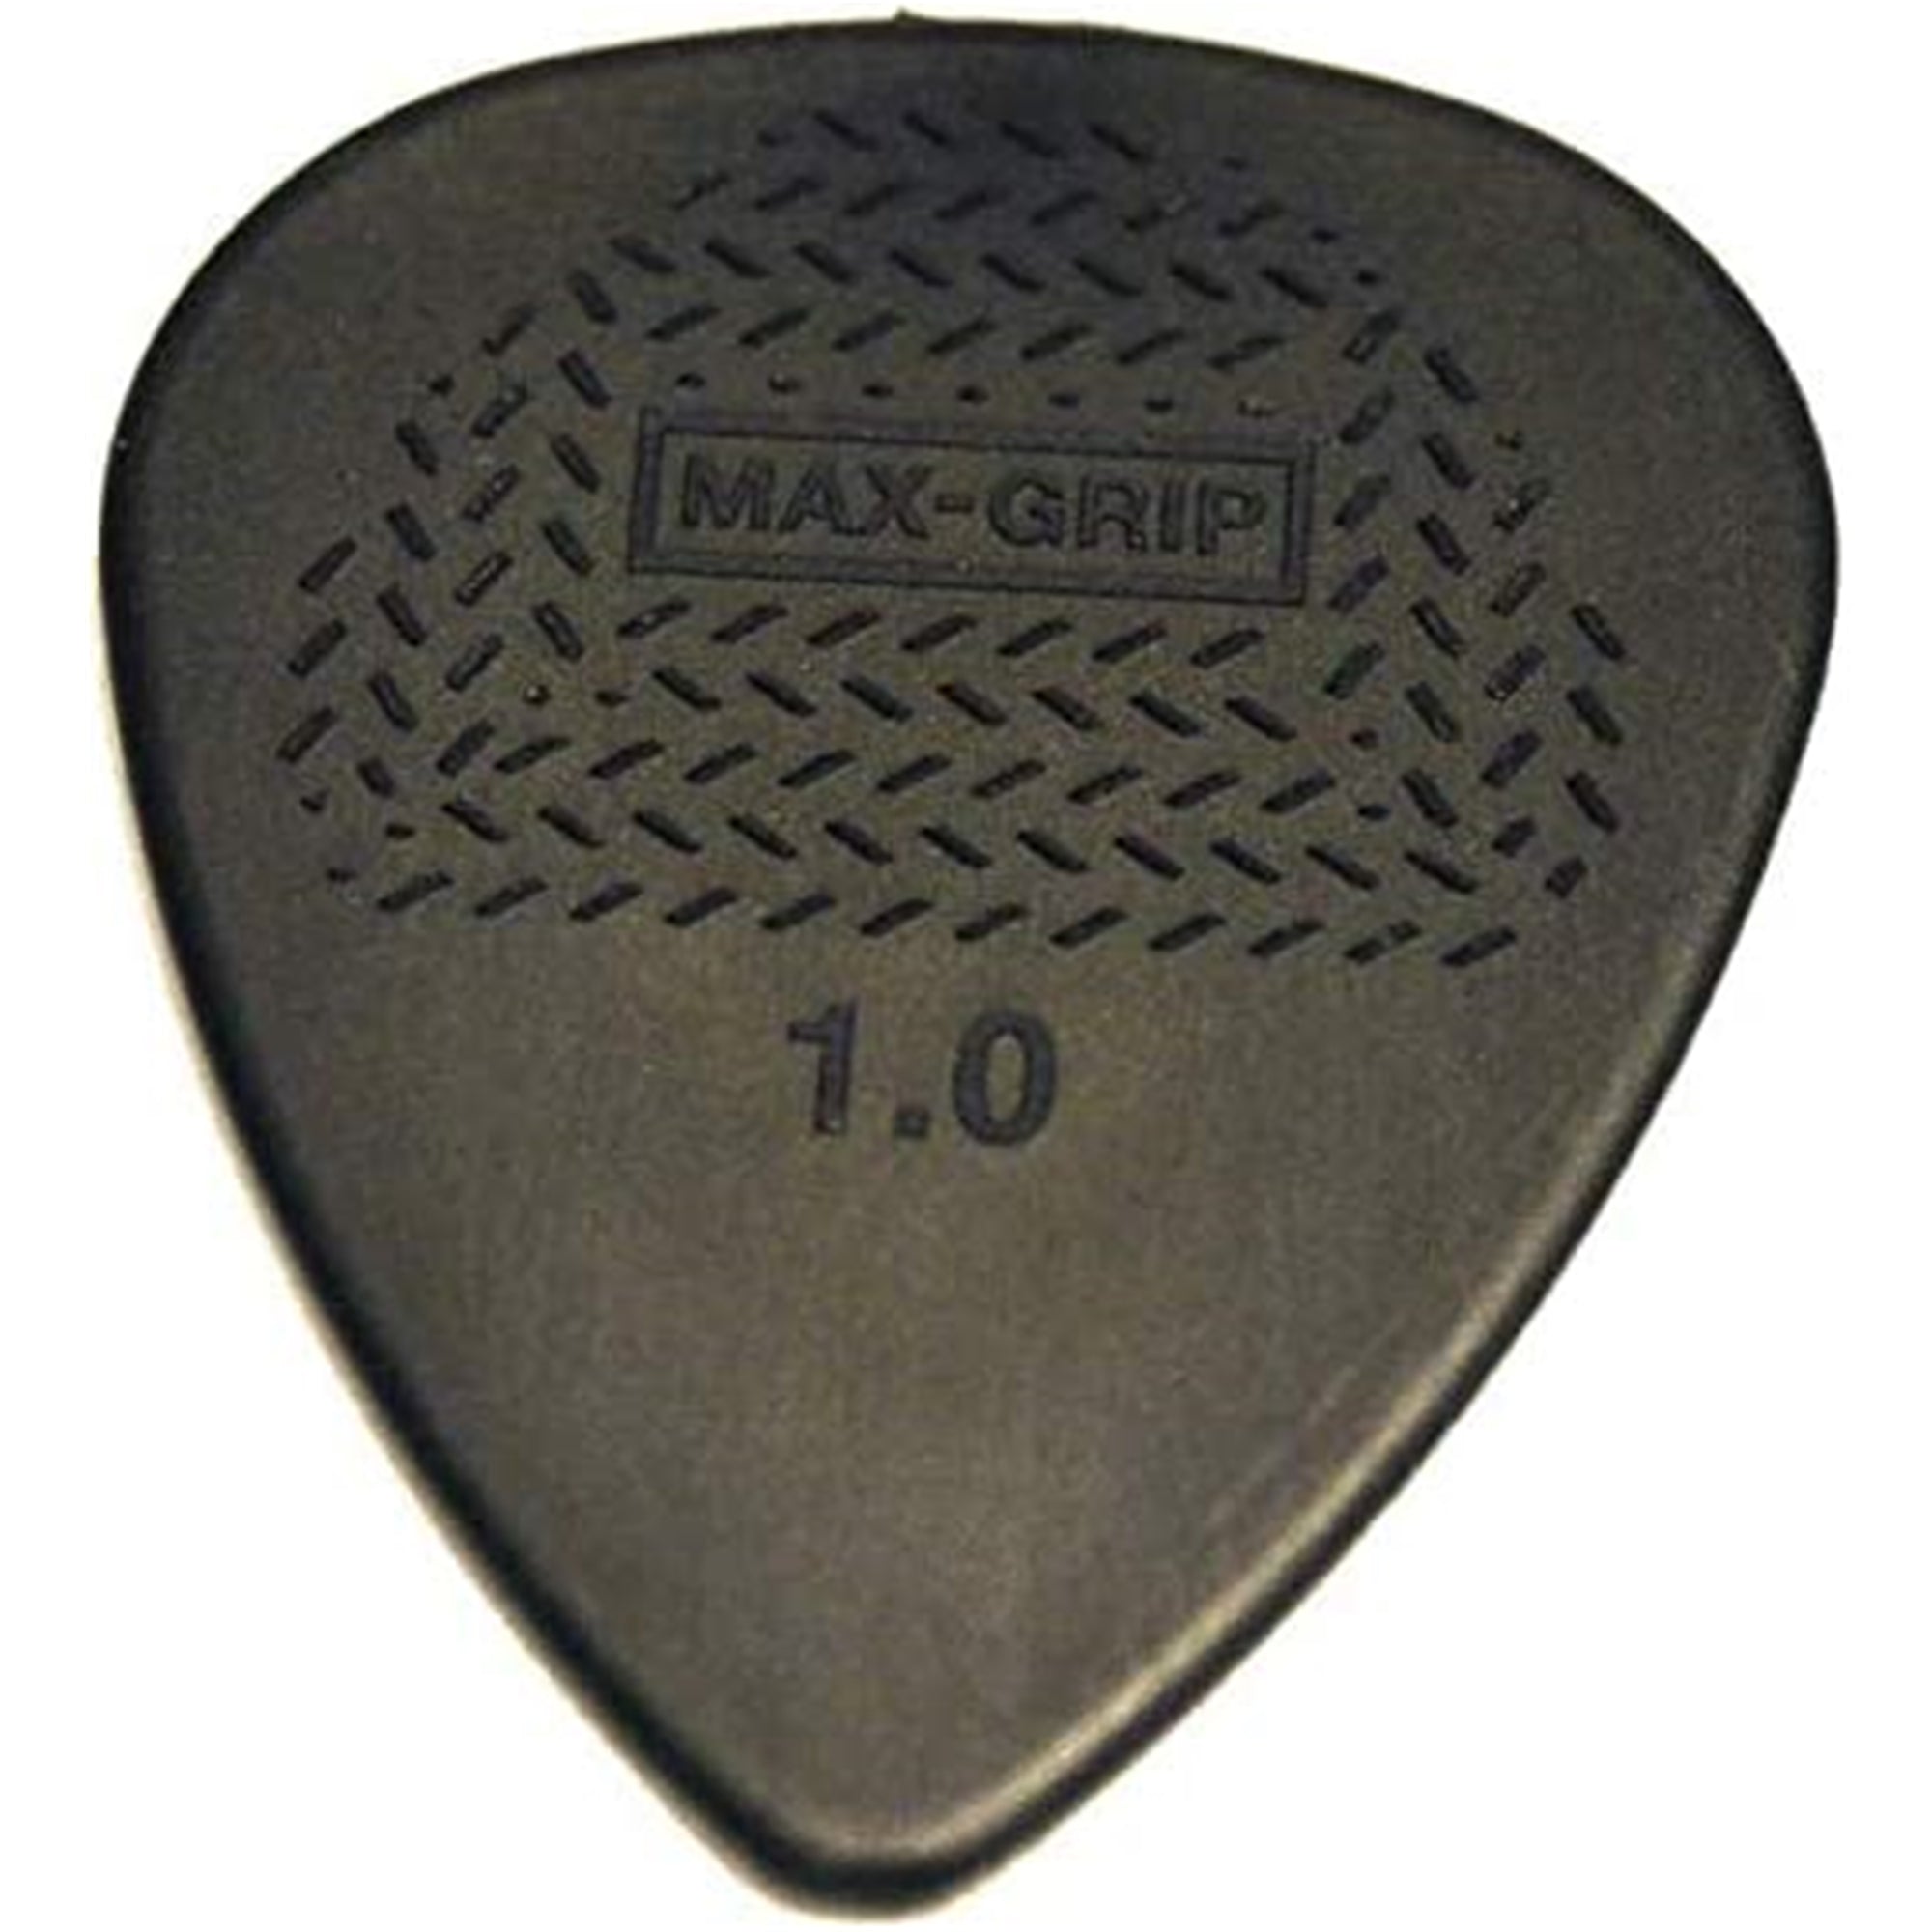 DUNLOP 449P100 1.0 Max Grip Guitar Picks (12 pk)